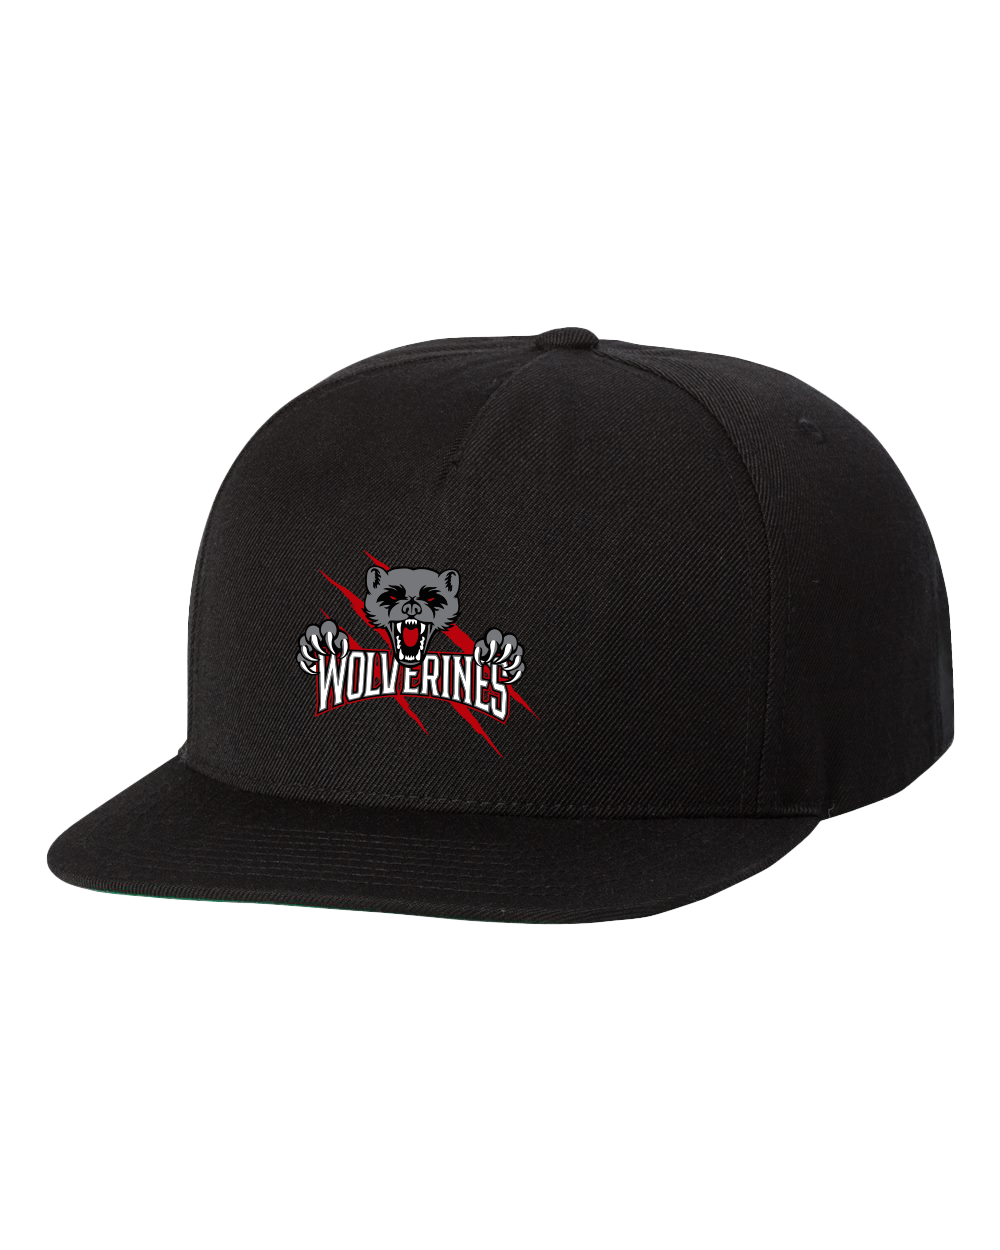 Wolverines -- Yupoong Snapback Flat Brim Hat